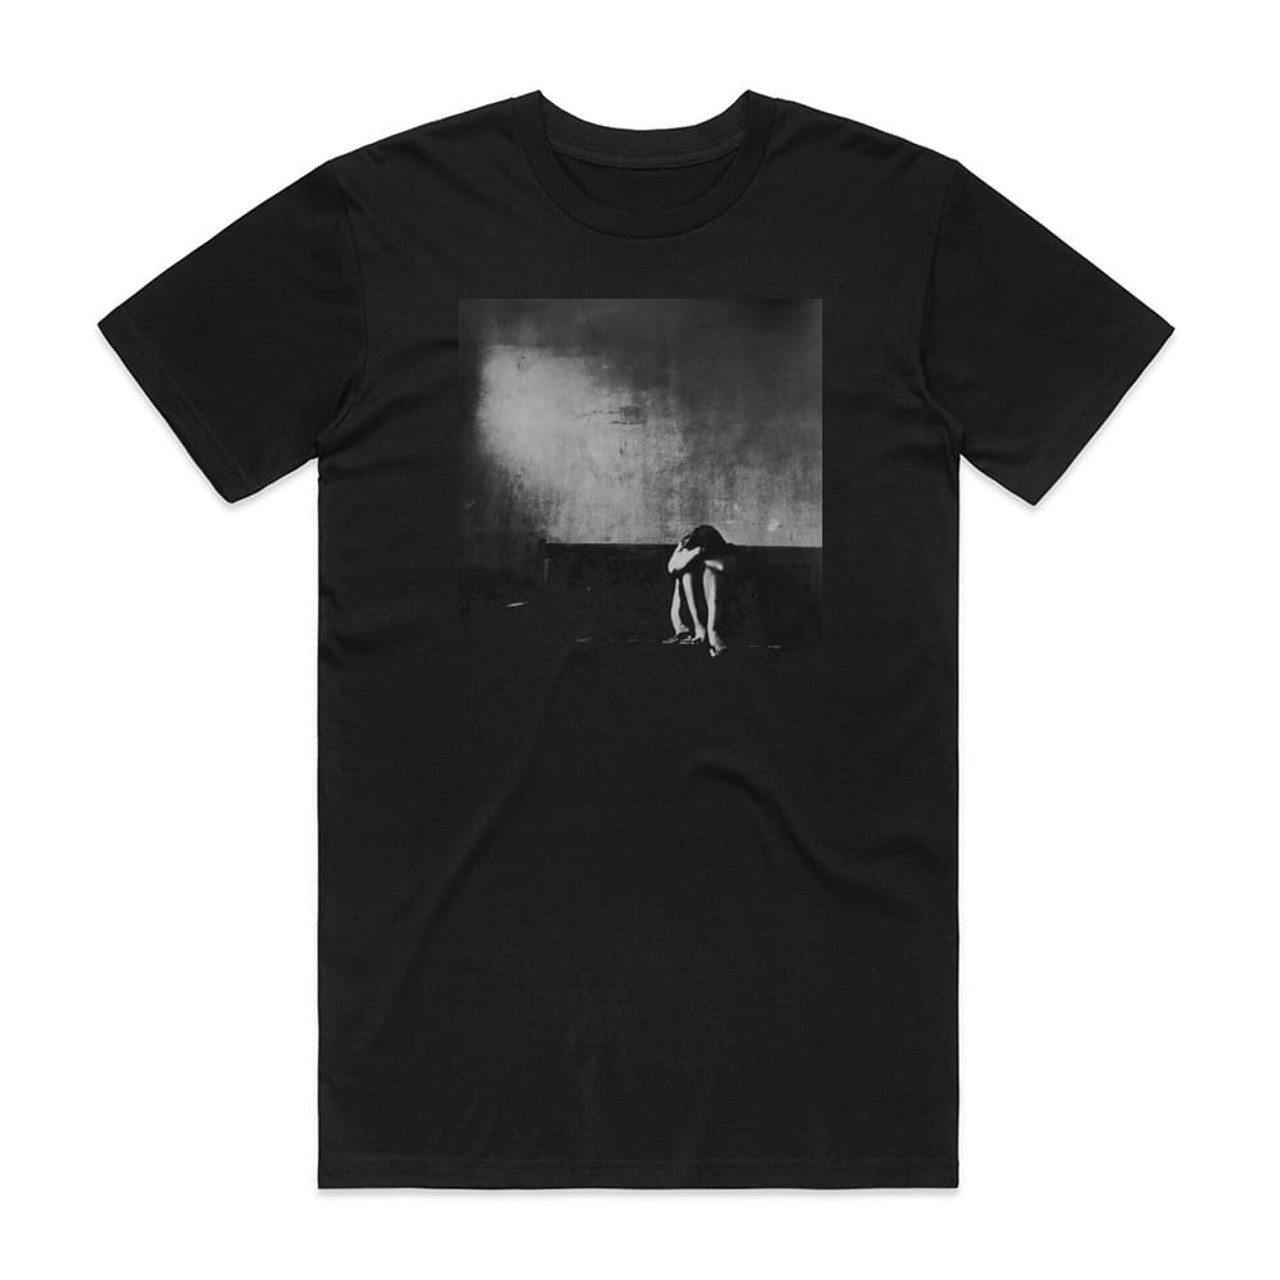 Thantifaxath Sacred White Noise Album Cover T-Shirt Black